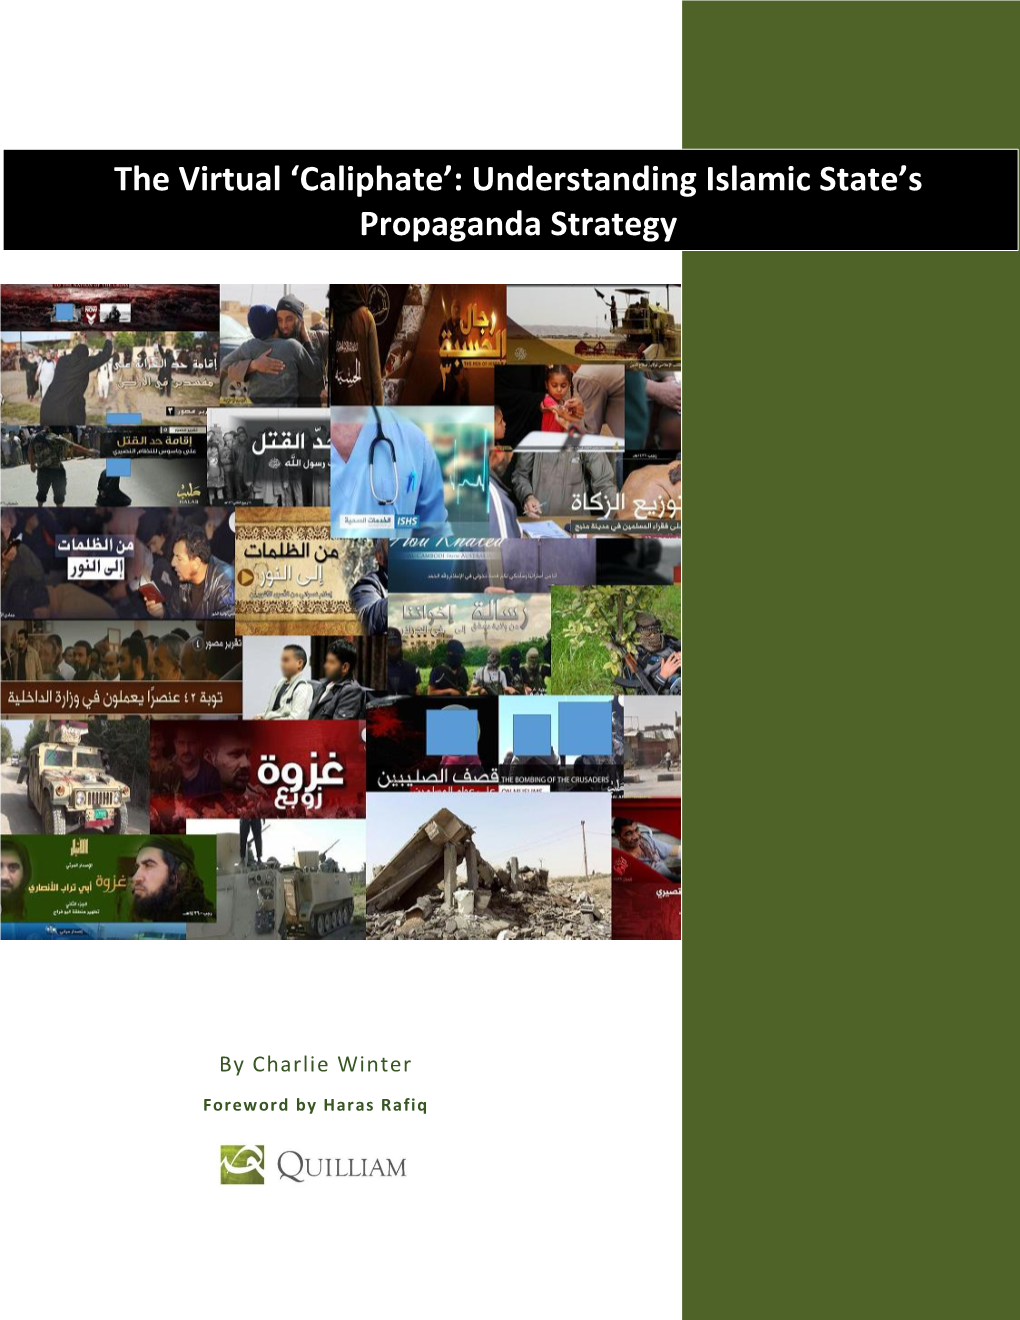 The Virtual 'Caliphate': Understanding Islamic State's Propaganda Strategy